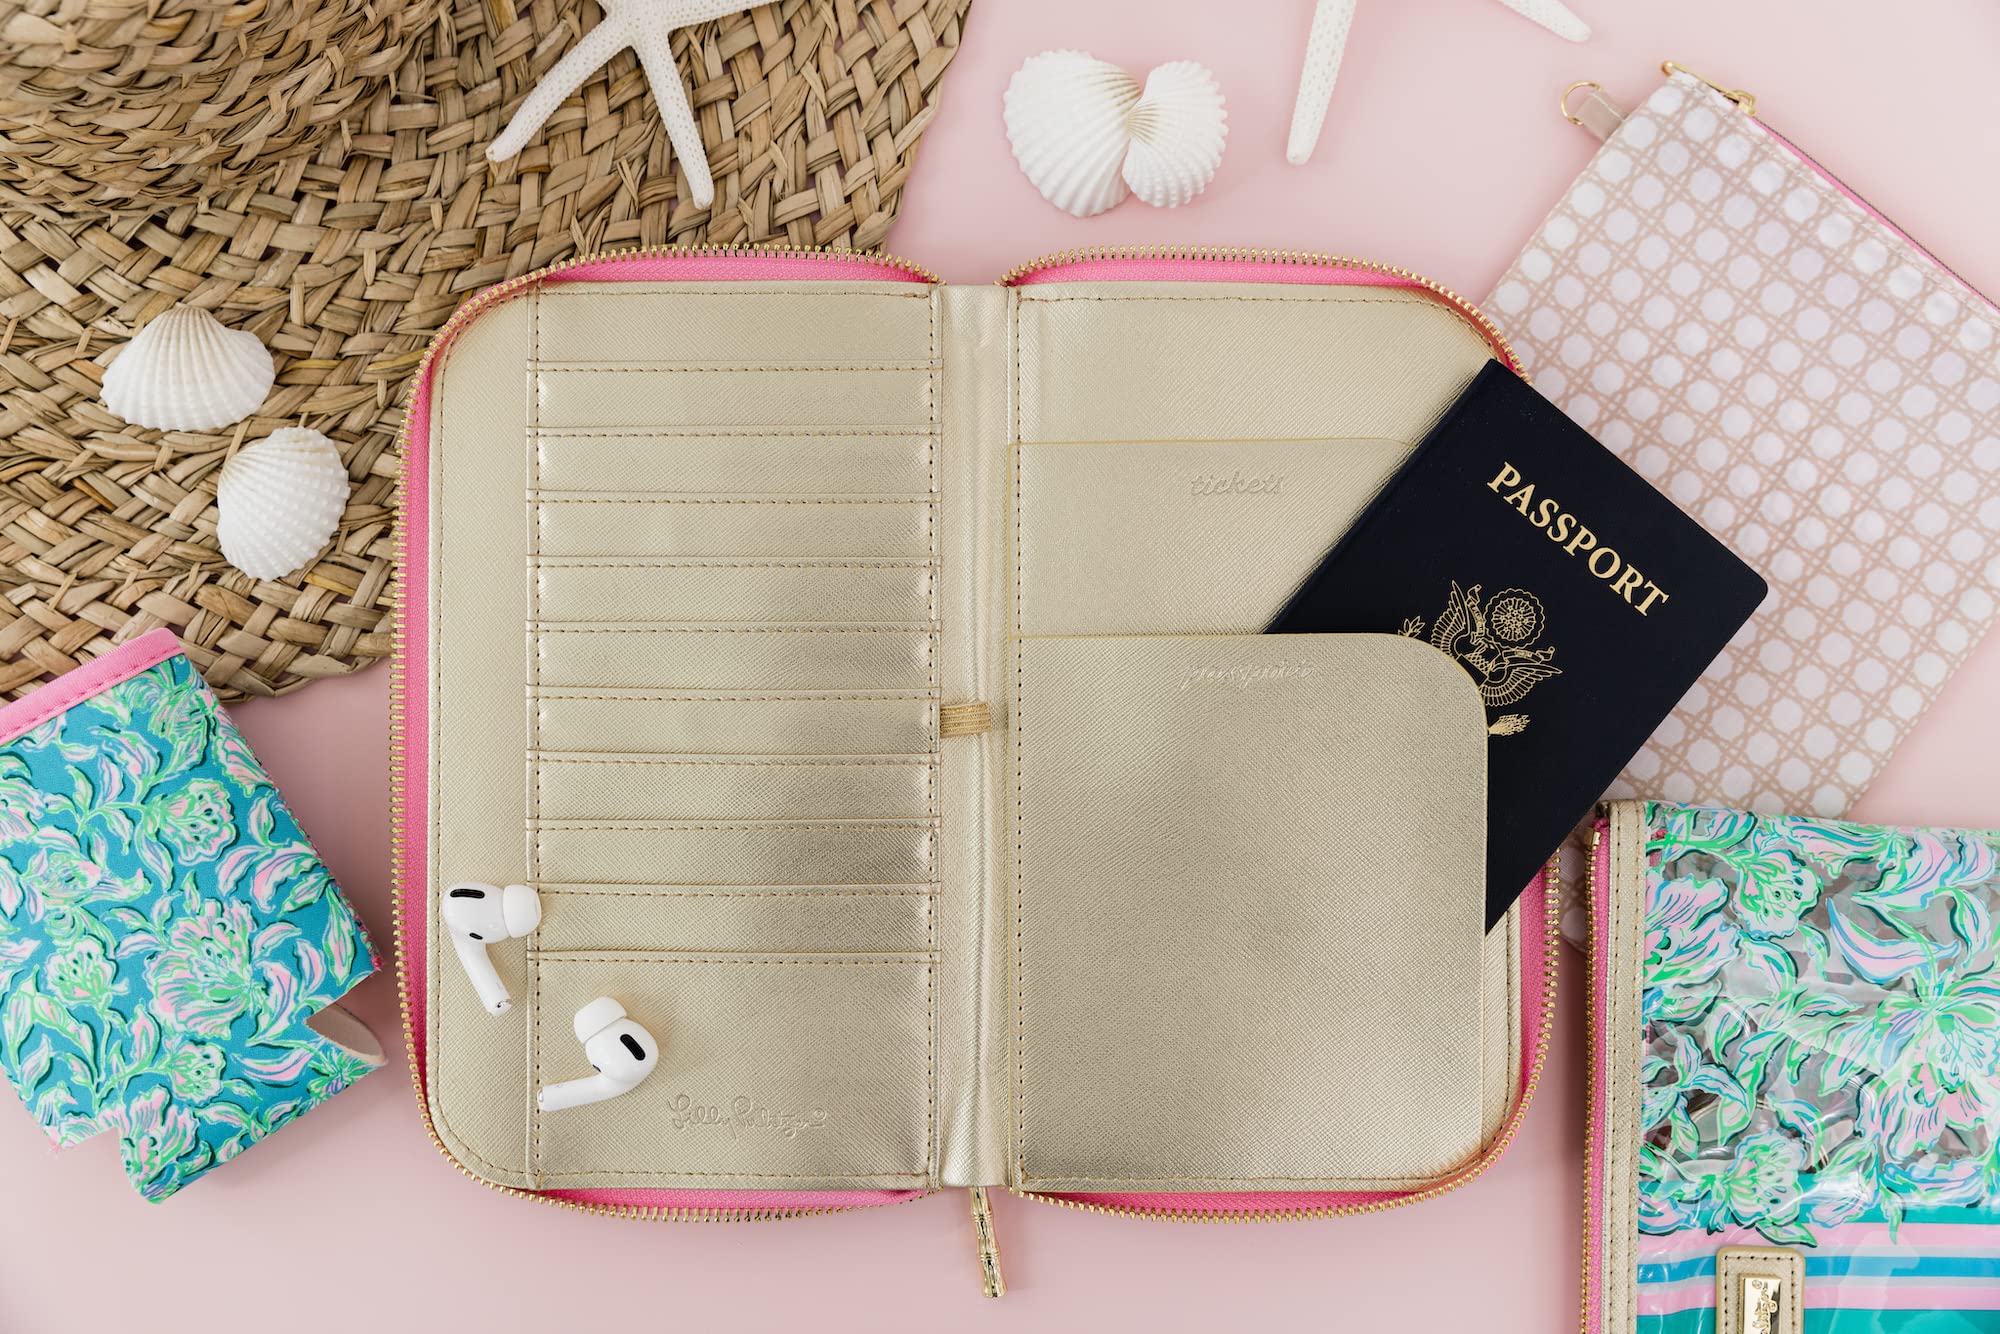 Lilly Pulitzer Travel Wallet Passport Holder, Vegan Leather Wristlet Wallet for Women, Travel Document Organizer, Chick Magnet